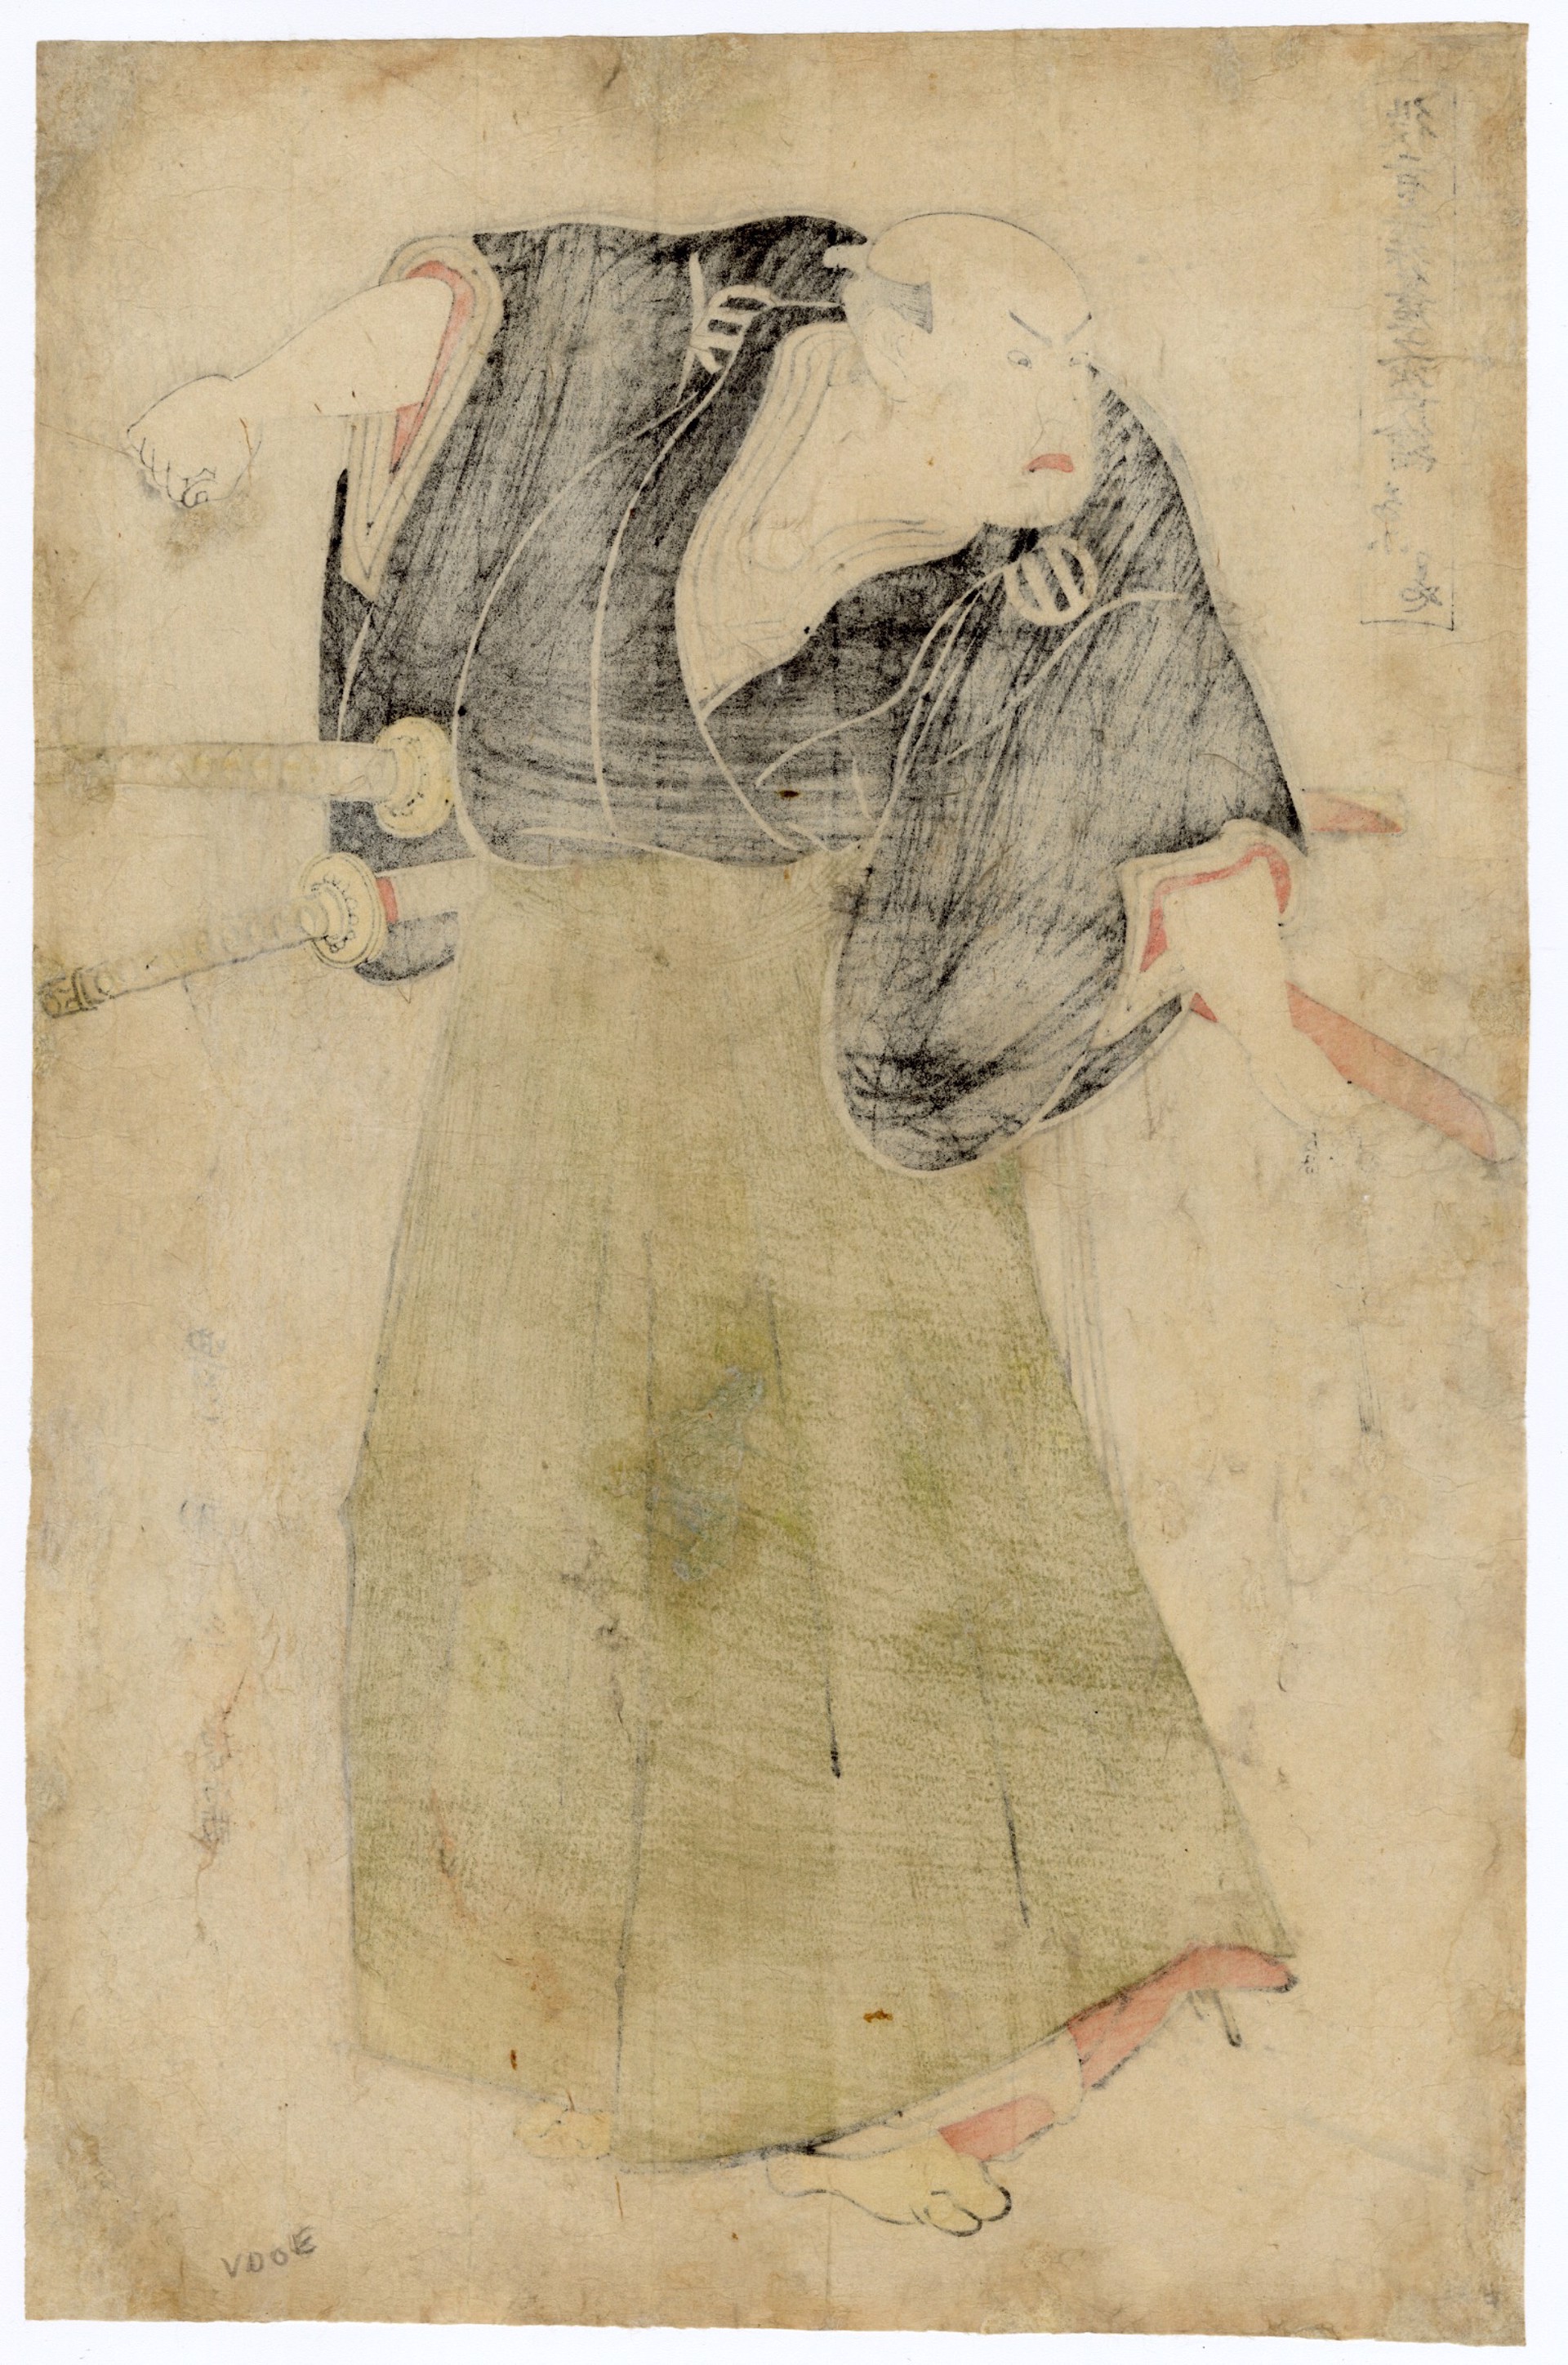 Kataoka Nizaemon VII as Shihara Kangeyu by Toyokuni I